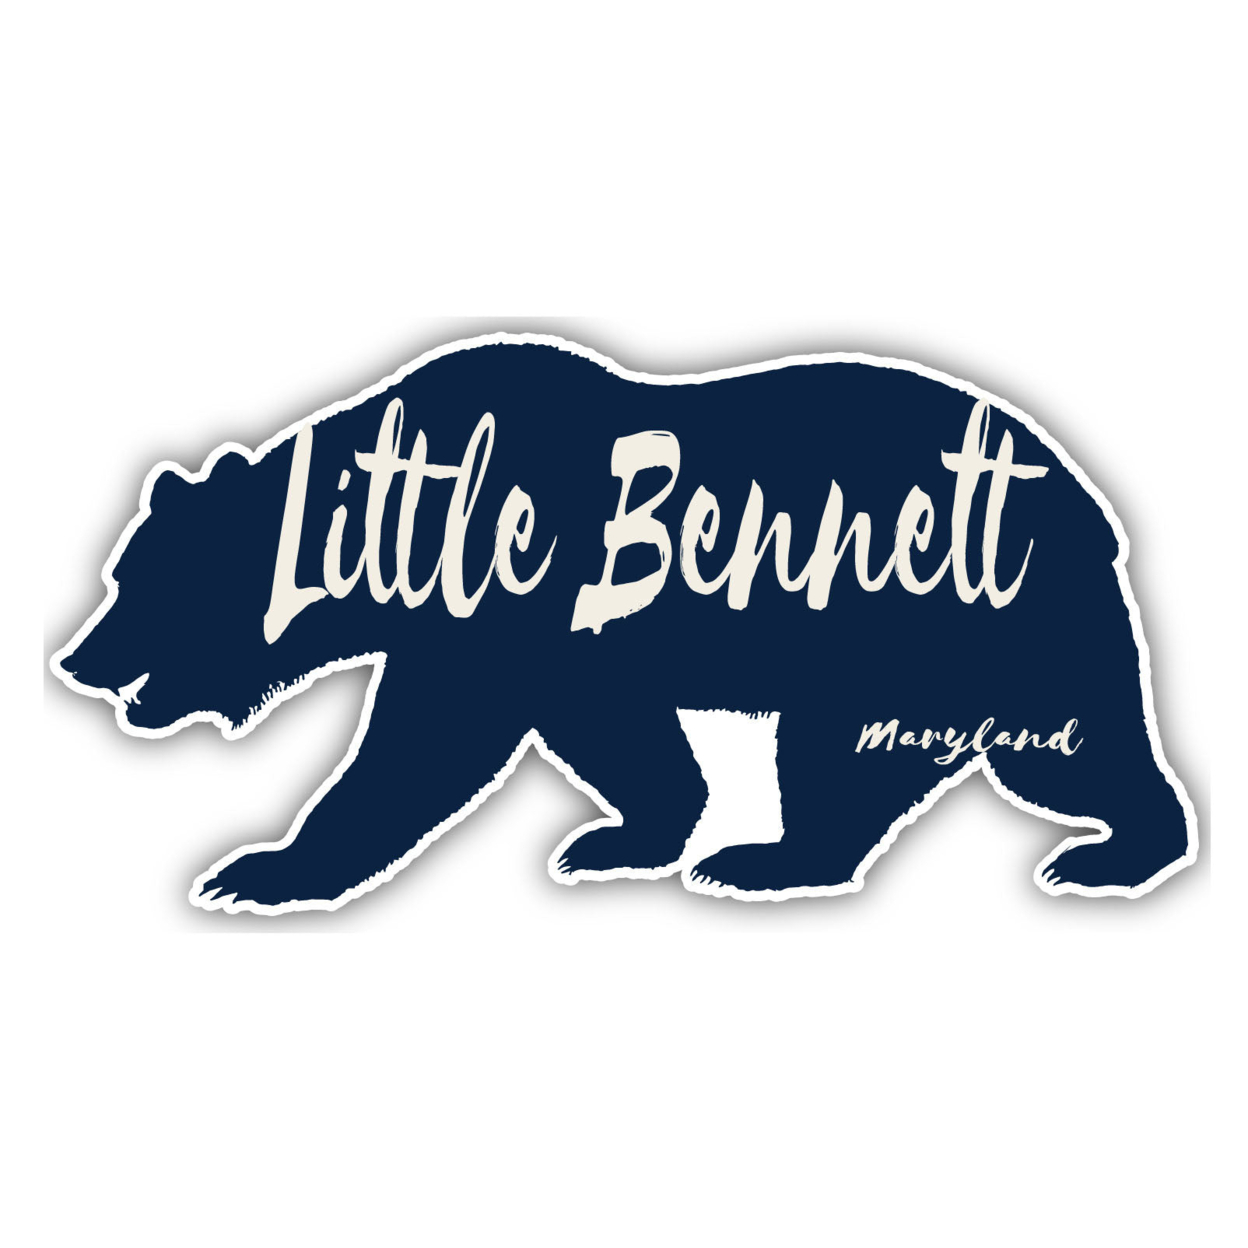 Little Bennett Maryland Souvenir Decorative Stickers (Choose Theme And Size) - 2-Inch, Bear